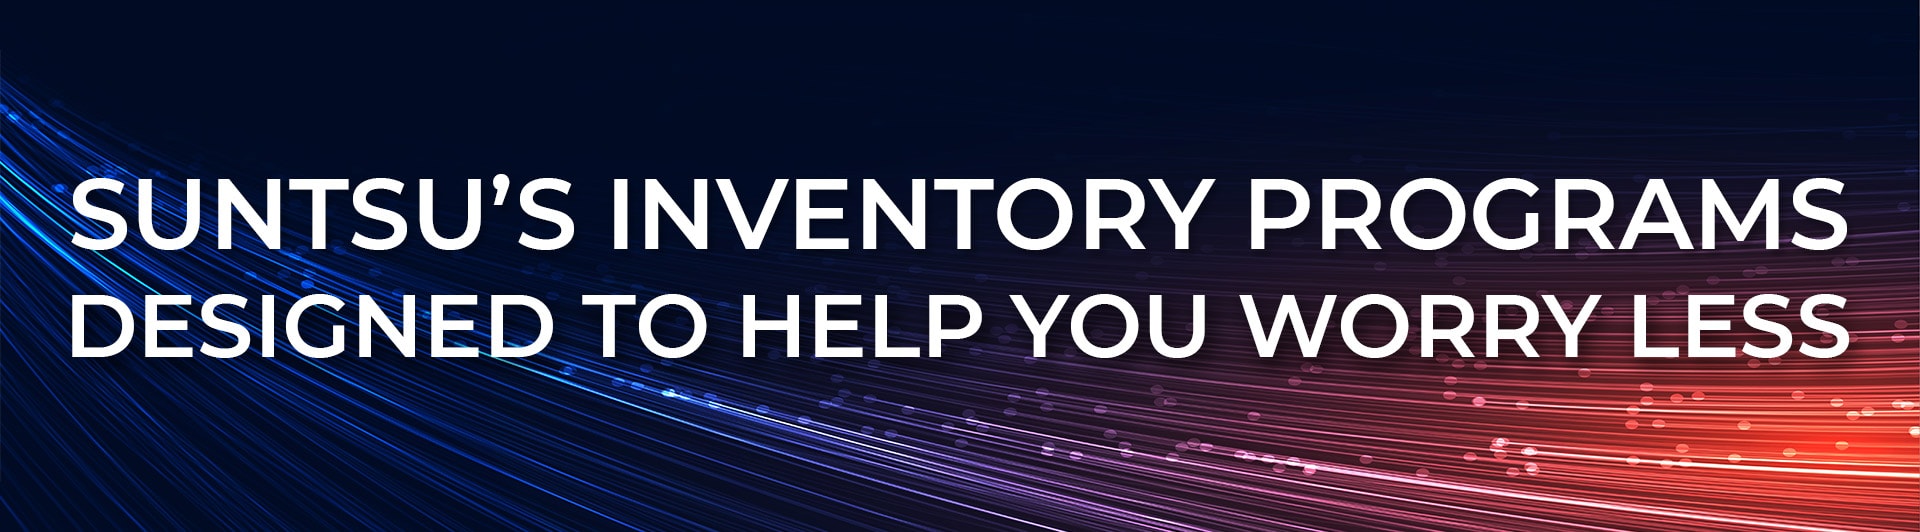 Suntsu’s Inventory Programs - Designed to Help You Worry Less